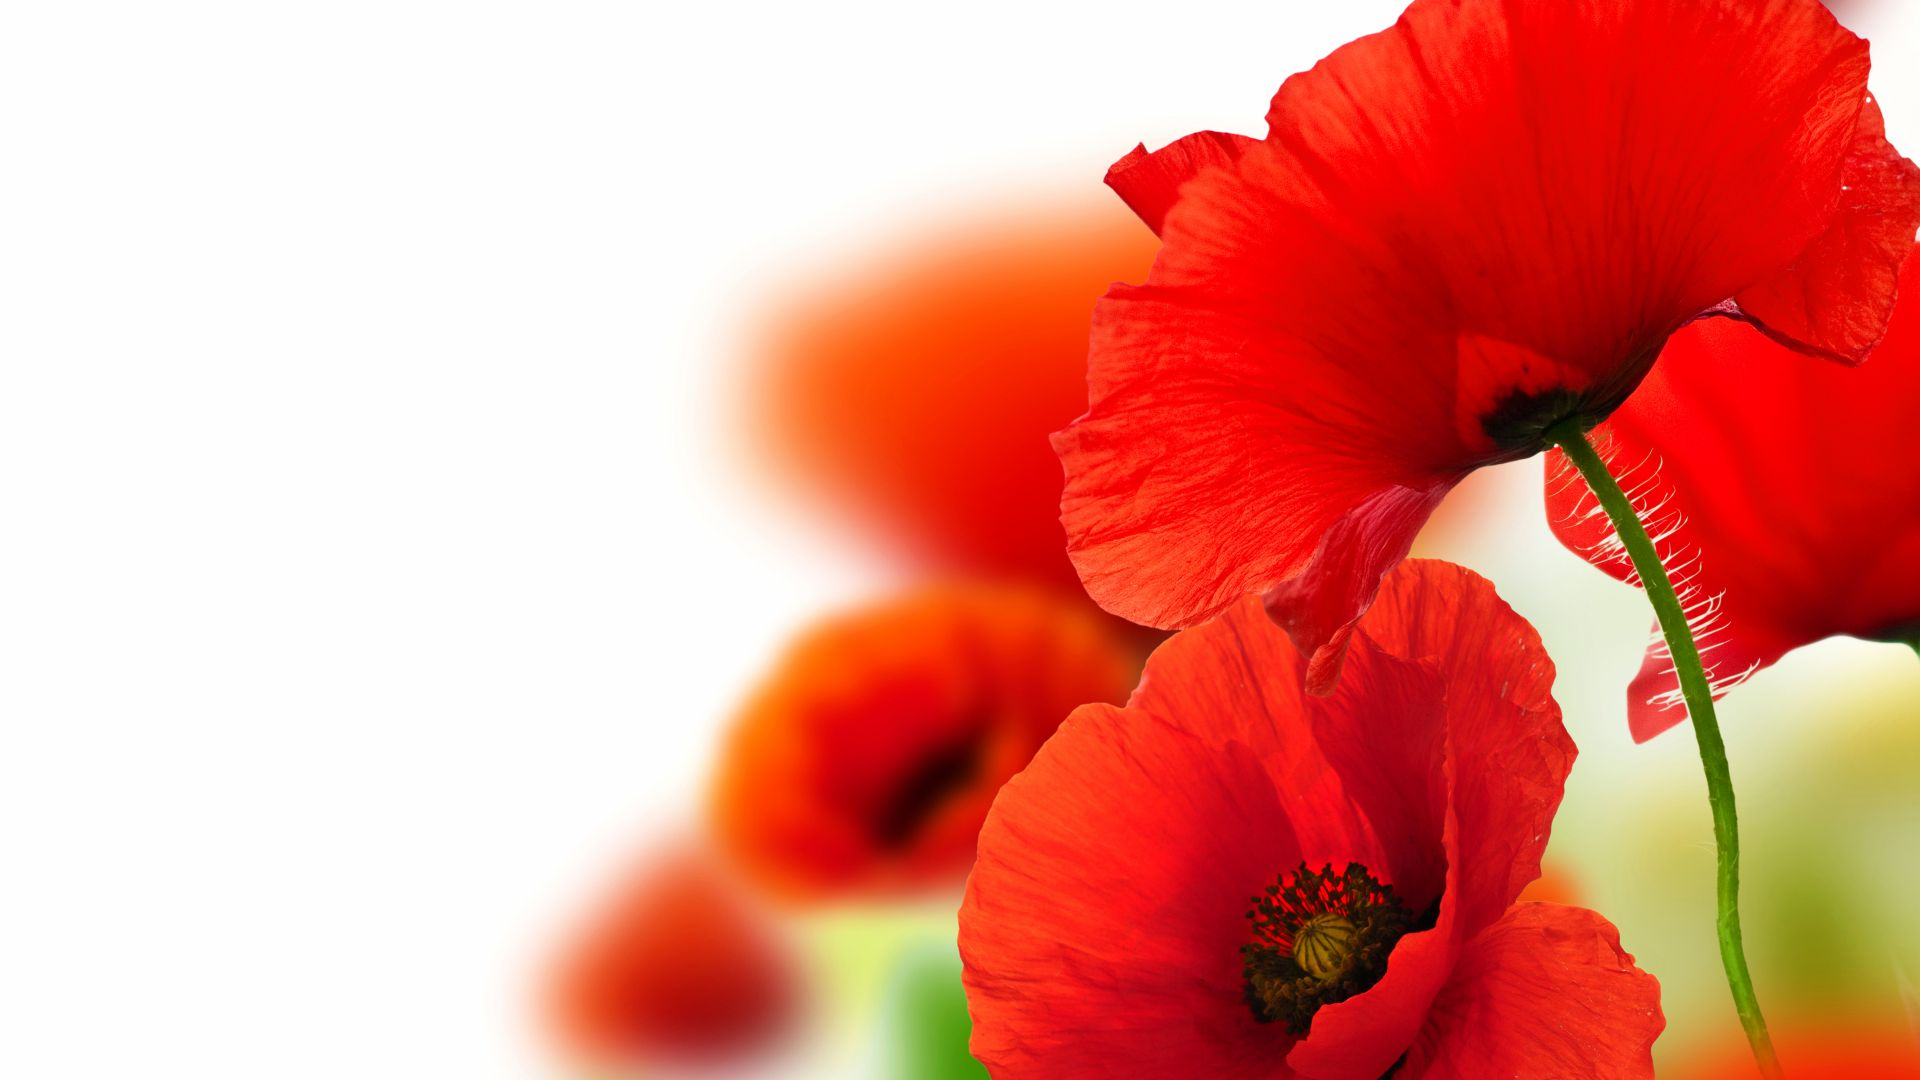 1920x1080 Desktop Wallpaper Red Poppy Flower, Close Up, Hd Image, Picture, Background, Uyfim8